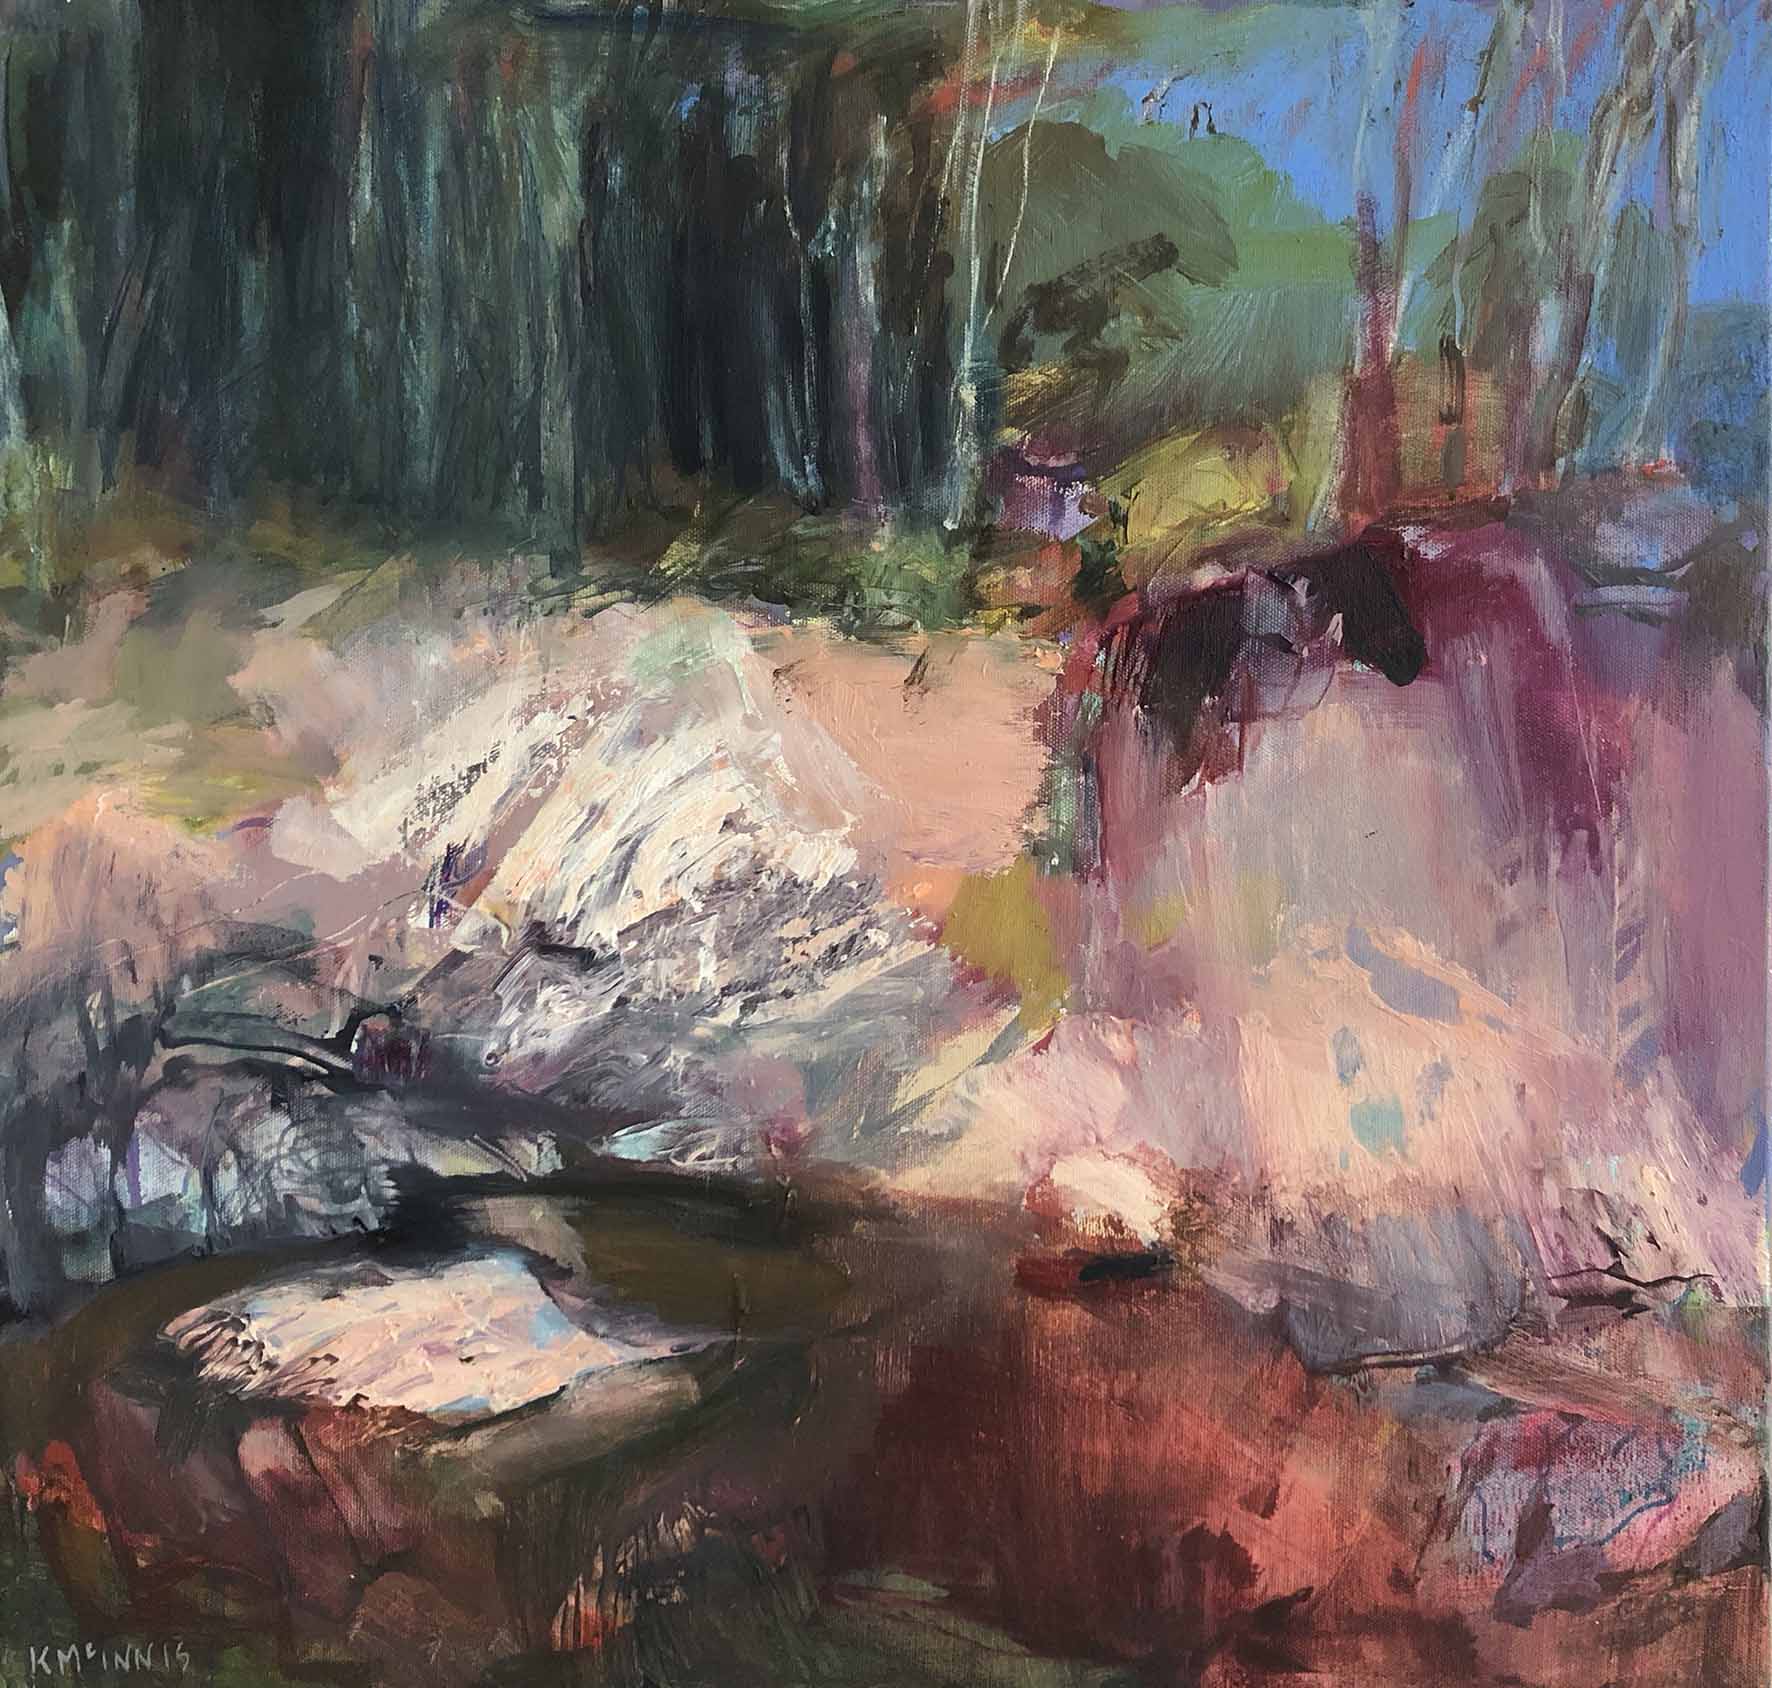 Kerry McInnis 'Embankment' oil on canvas 50 x 50cm $3,600